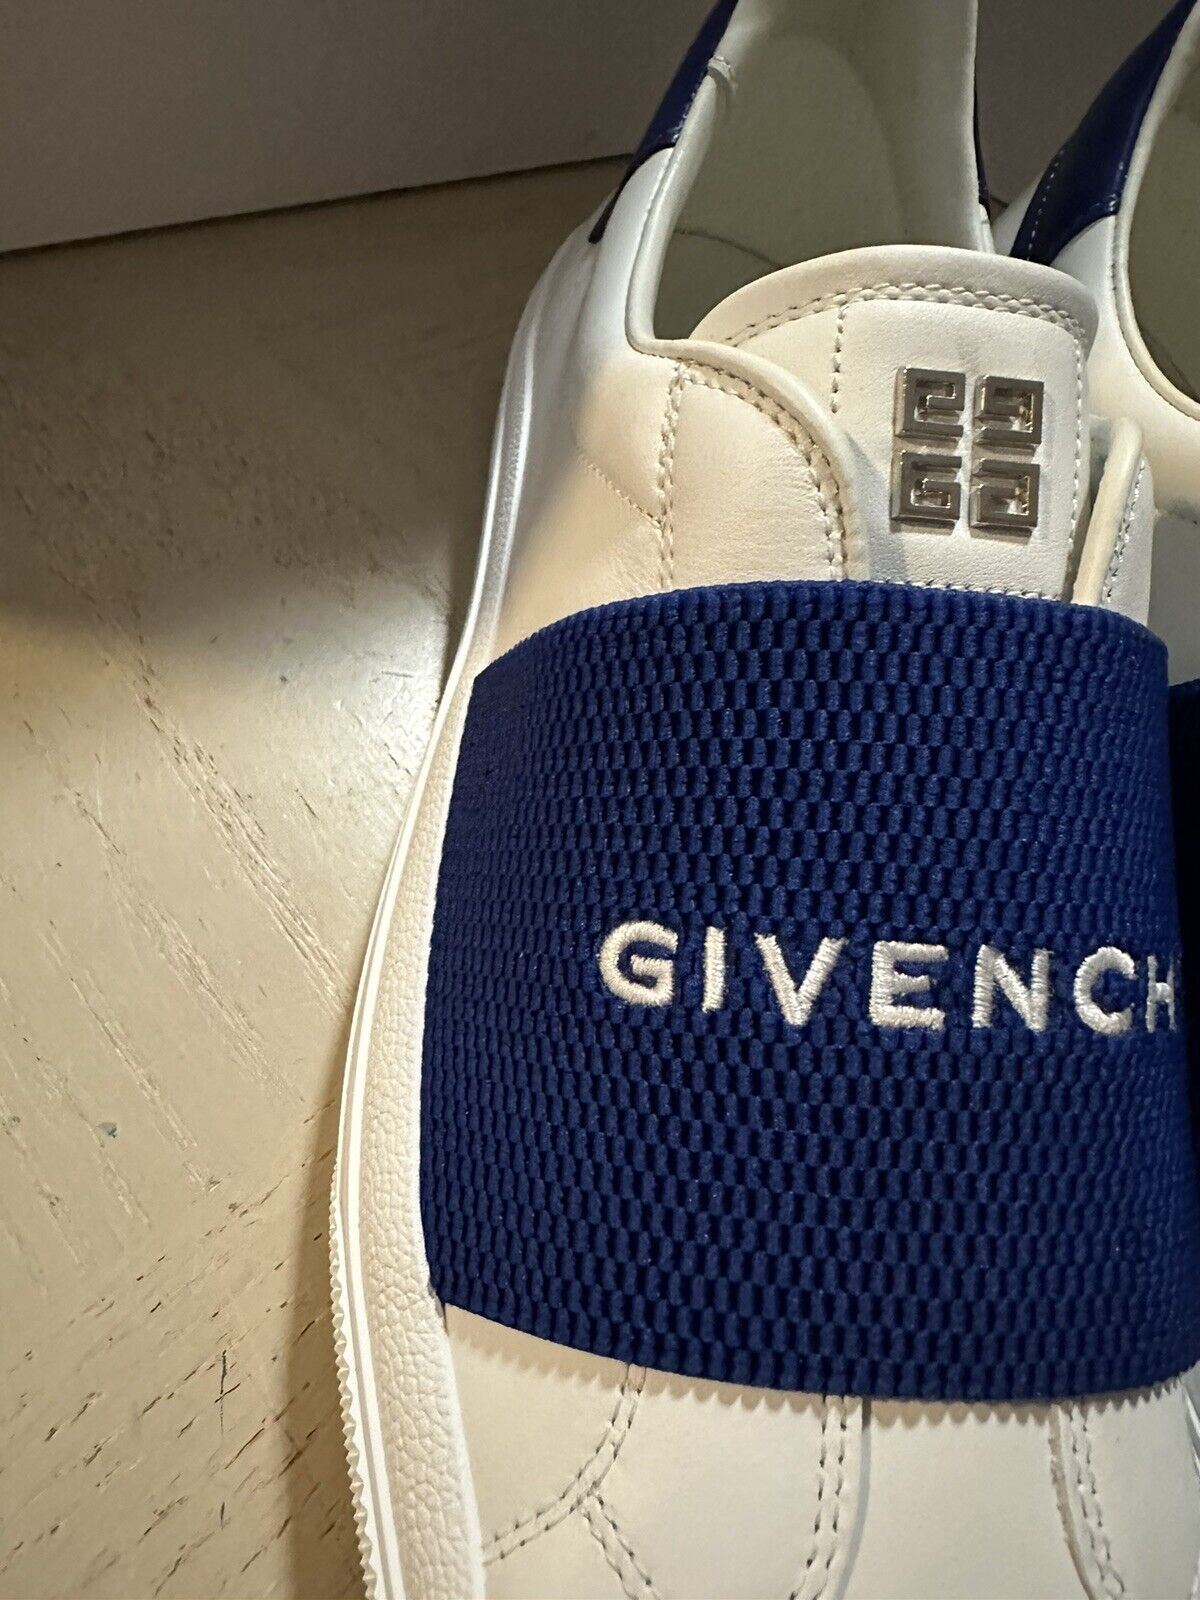 NIB Givenchy Men City Sport Elastic Vamp Leather Sneakers White/Blue 10 US/43 Eu